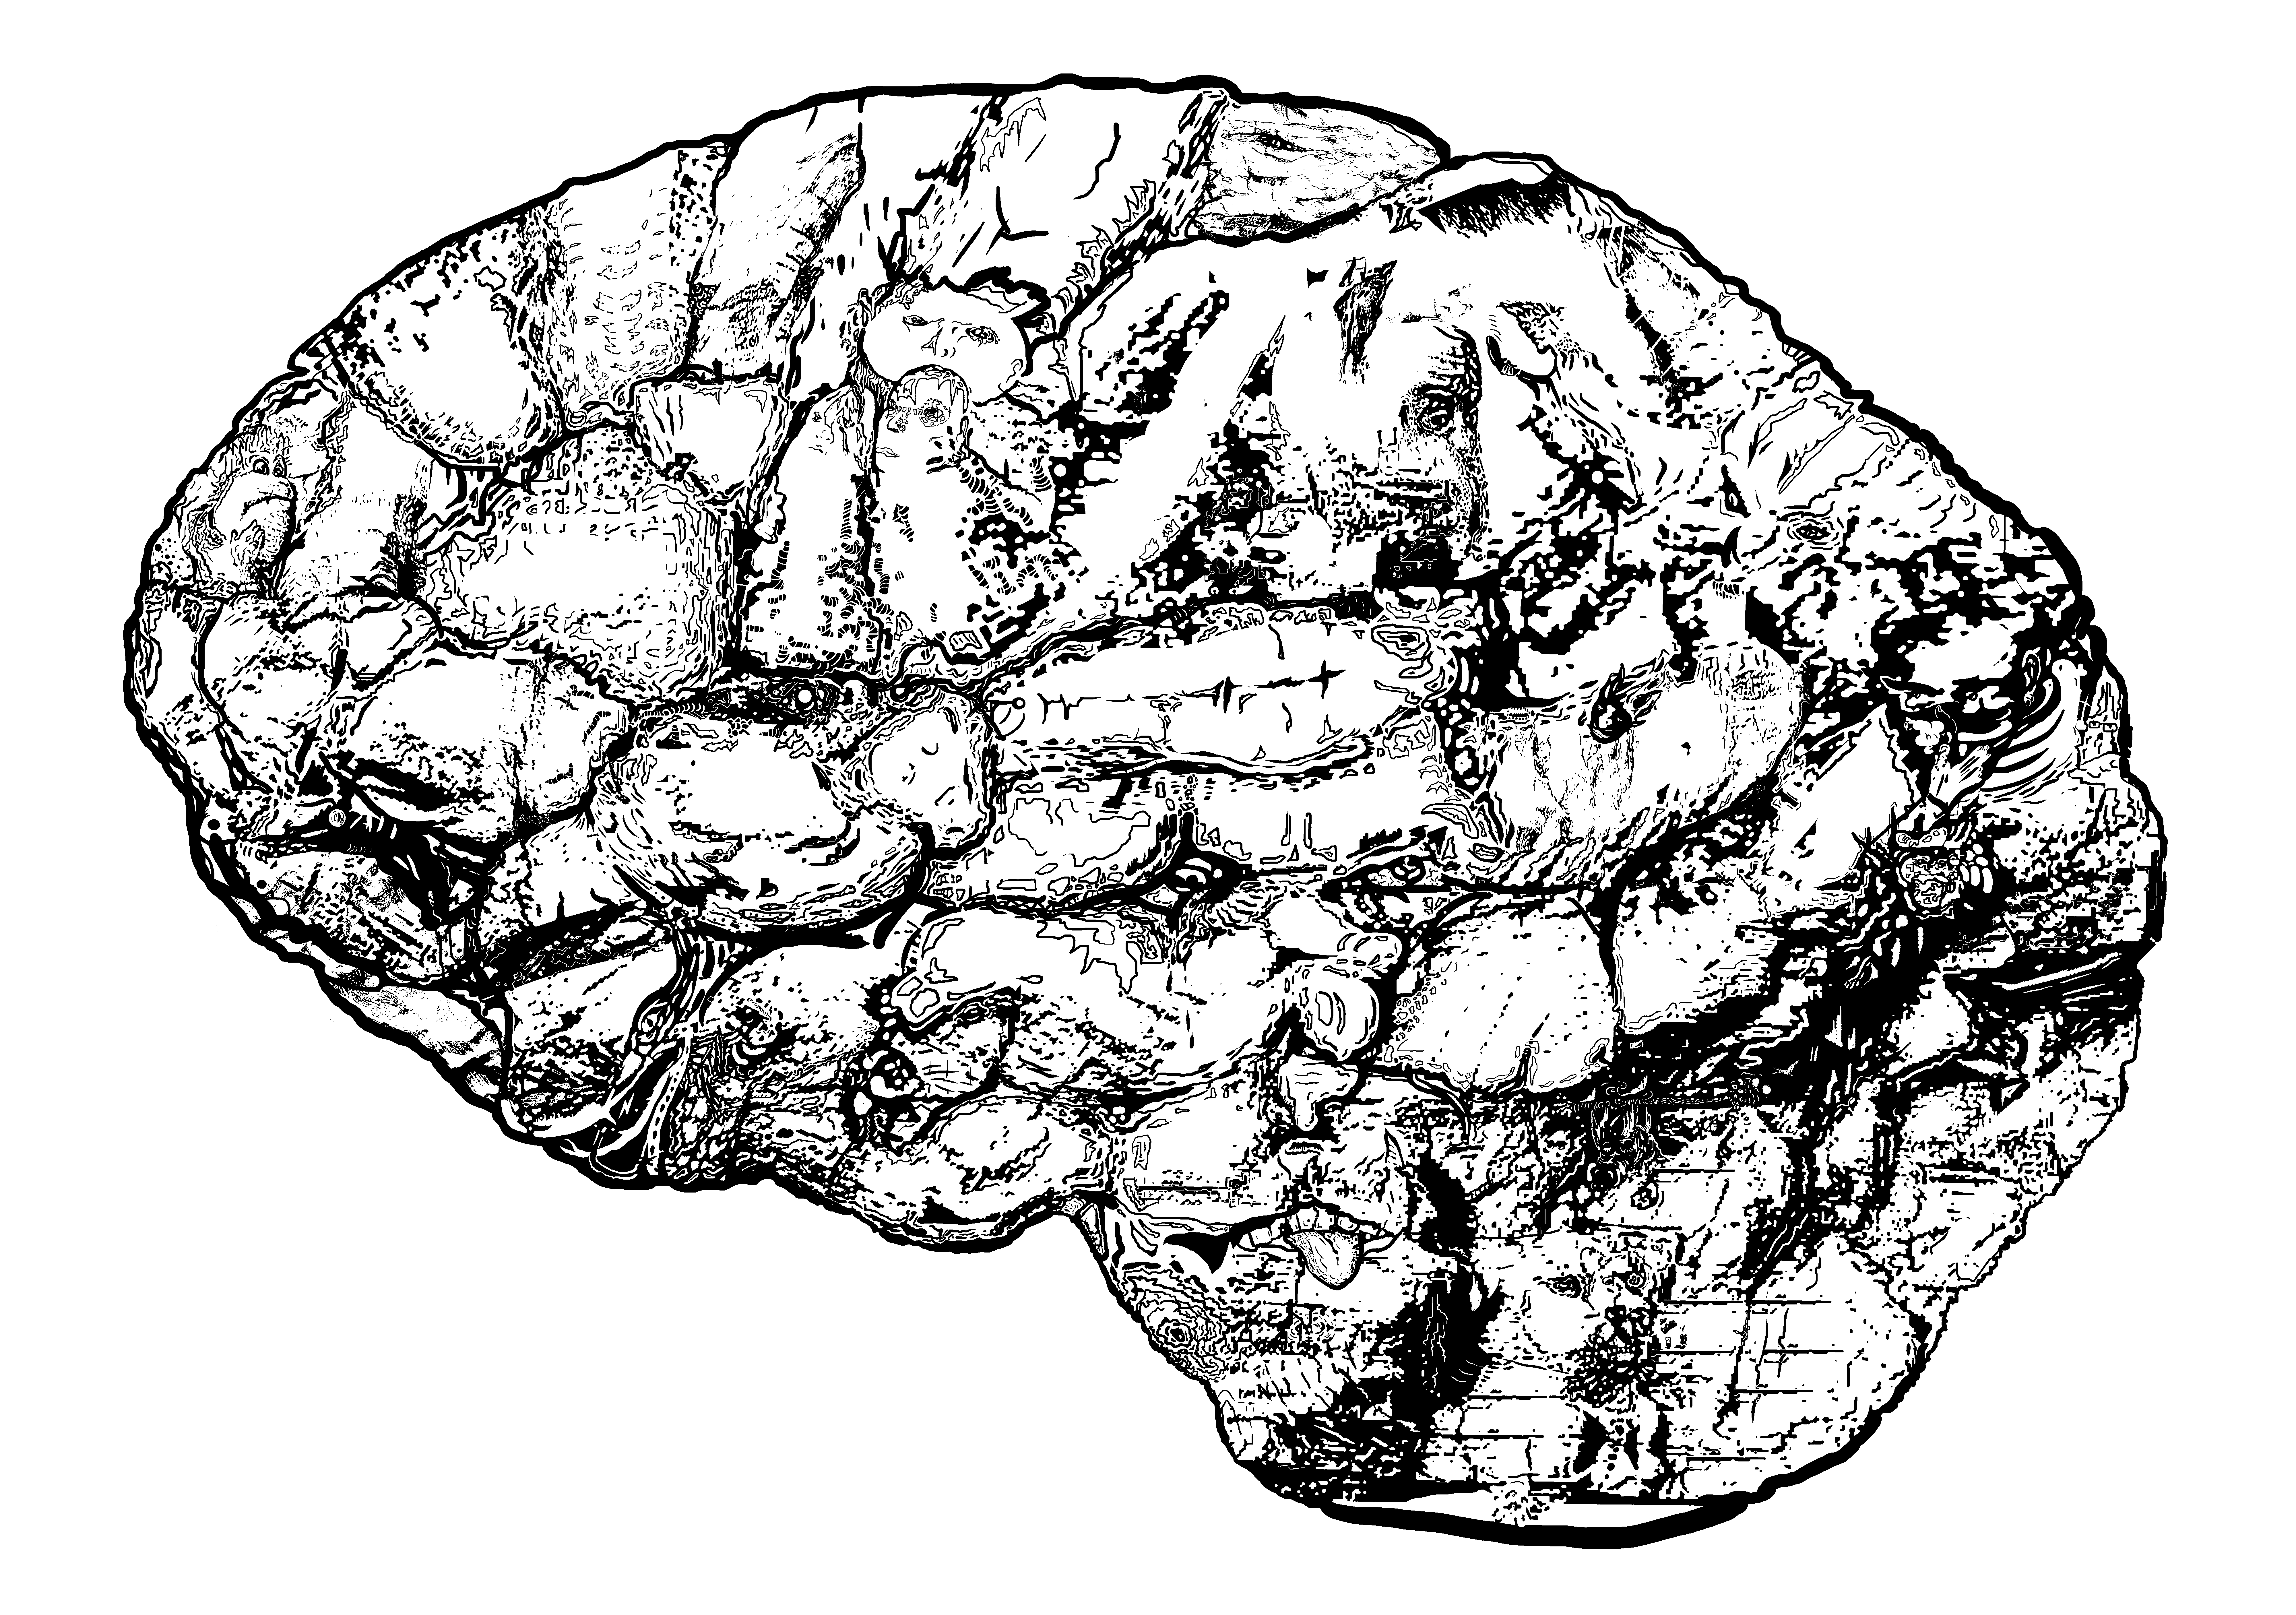 A hidden object drawing of a rocky brain